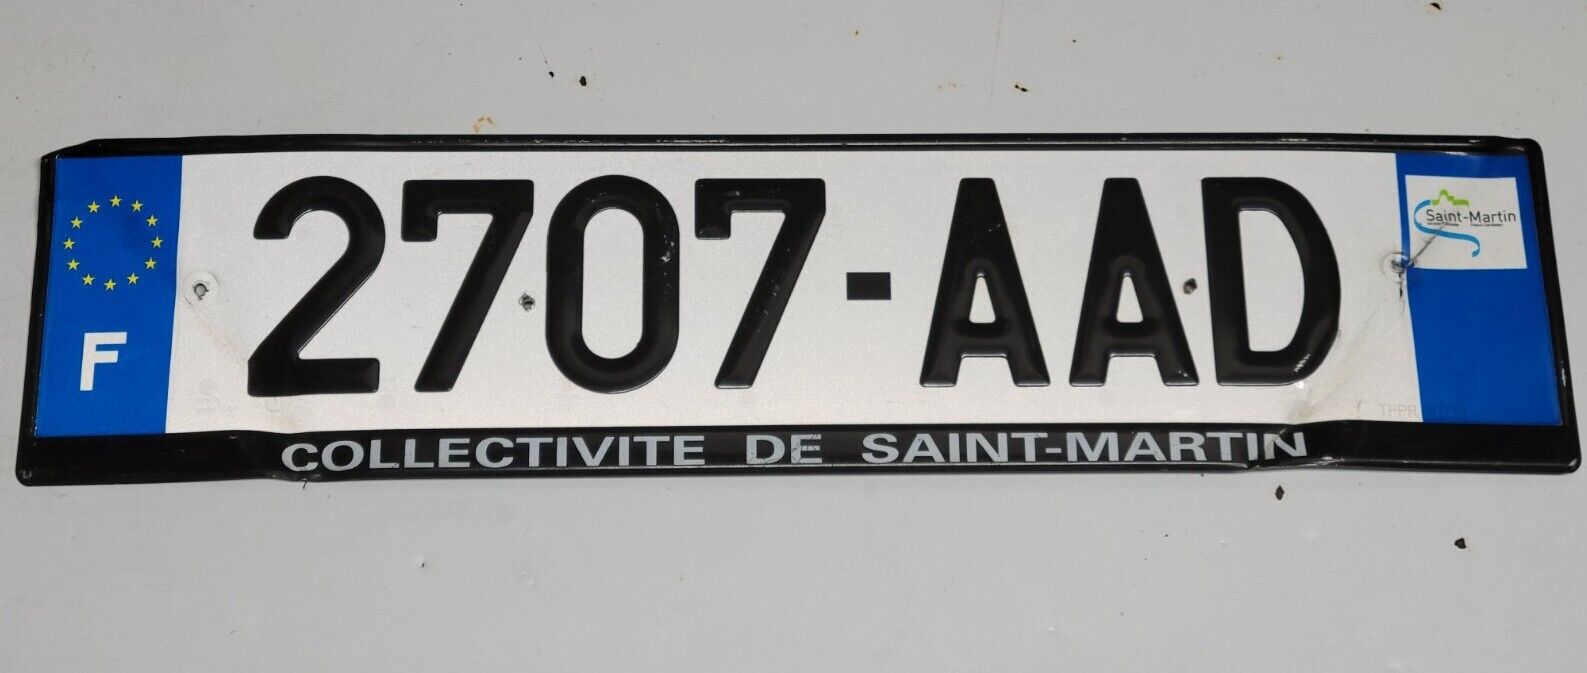 Collectivite De Saint-Martin License Plate 2707-AAD FRENCH Caraibe Francaise